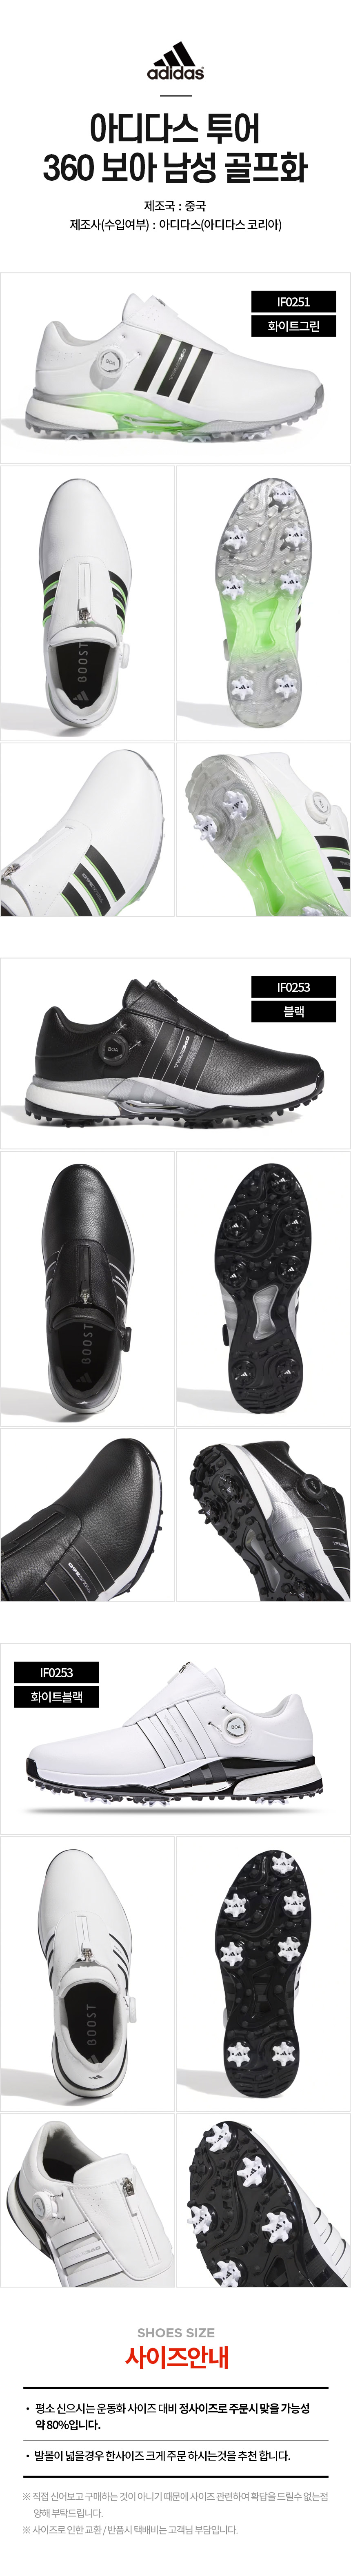 adidas_tour_360_boa_m_golf_shoes_24.jpg